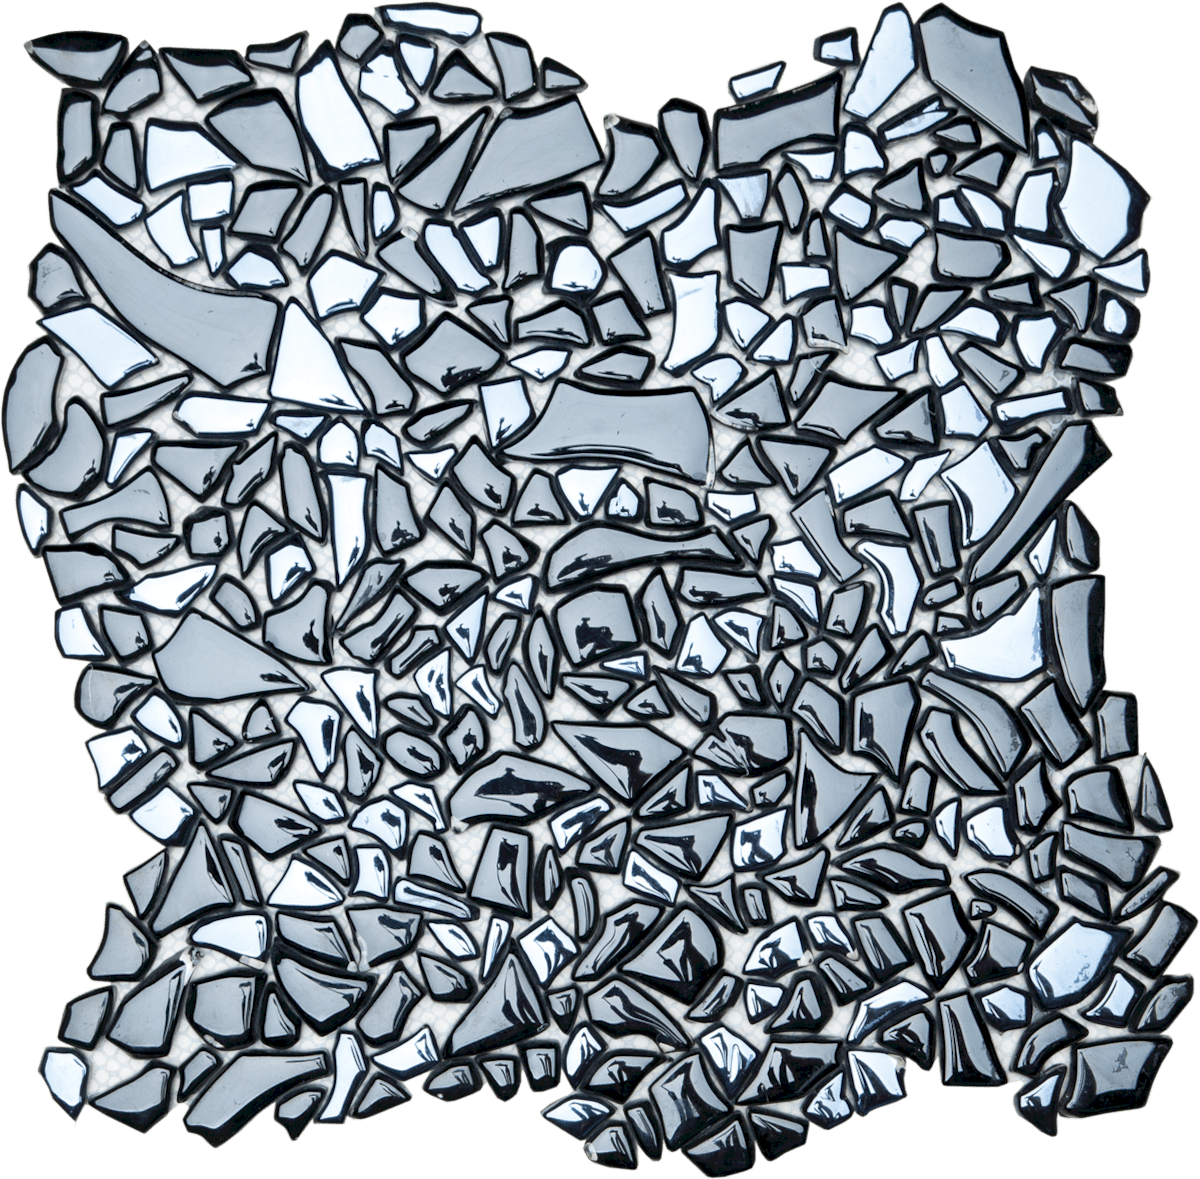 Skleněná mozaika Premium Mosaic černá 30x30 cm lesk MOSBKP Premium Mosaic